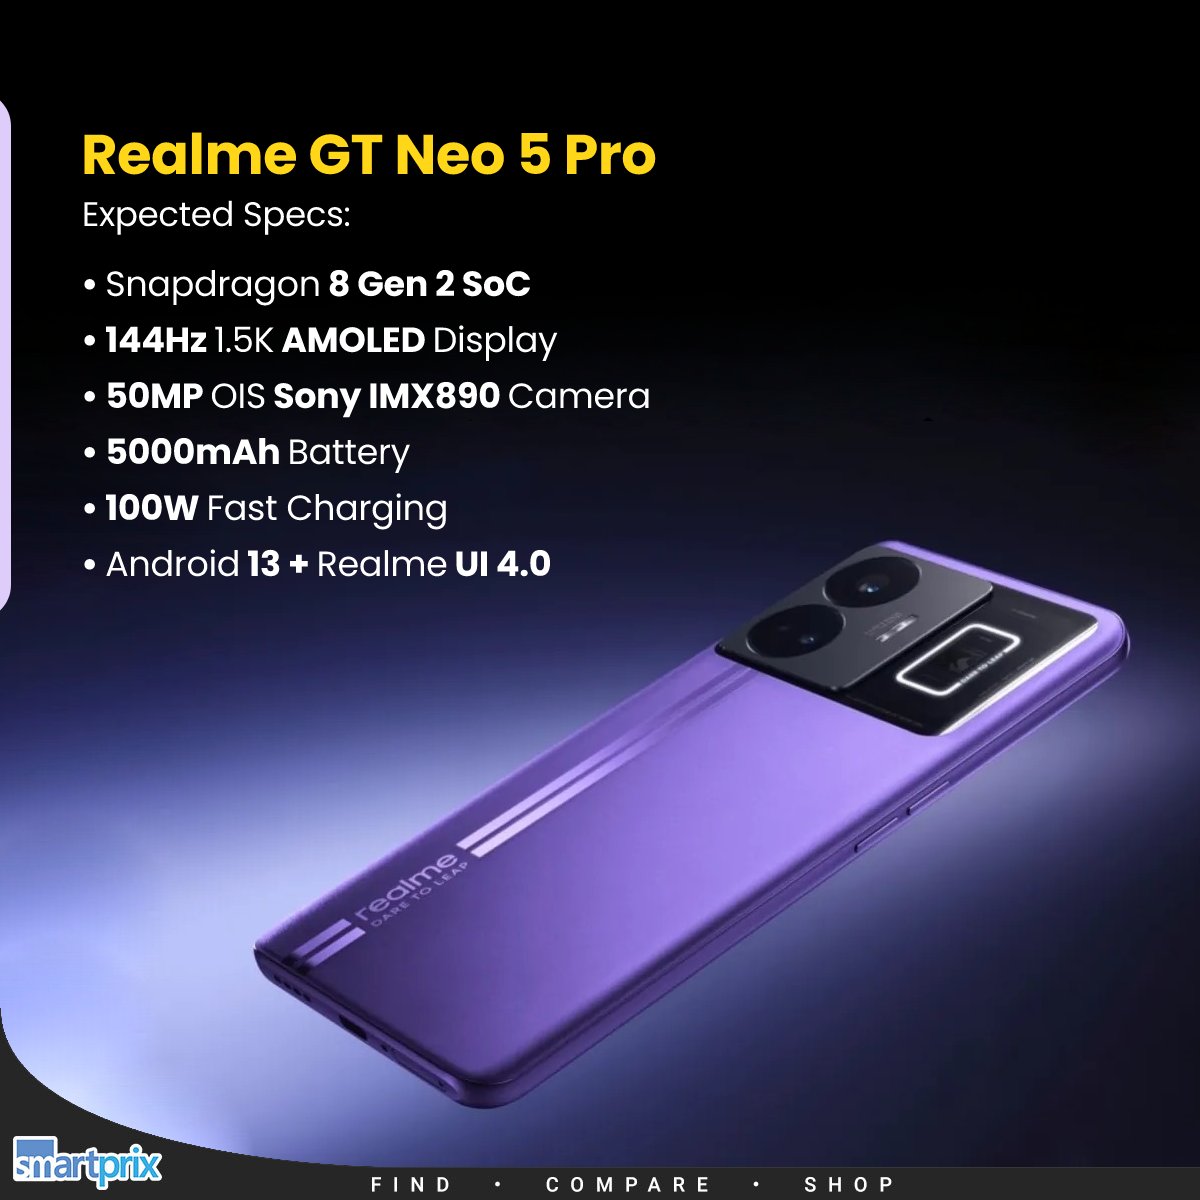 X 上的Smartprix：「Realme GT Neo 5 Pro key specs leaked ahead of launch   #Realme #RealmeGTNeo5Pro  /  X